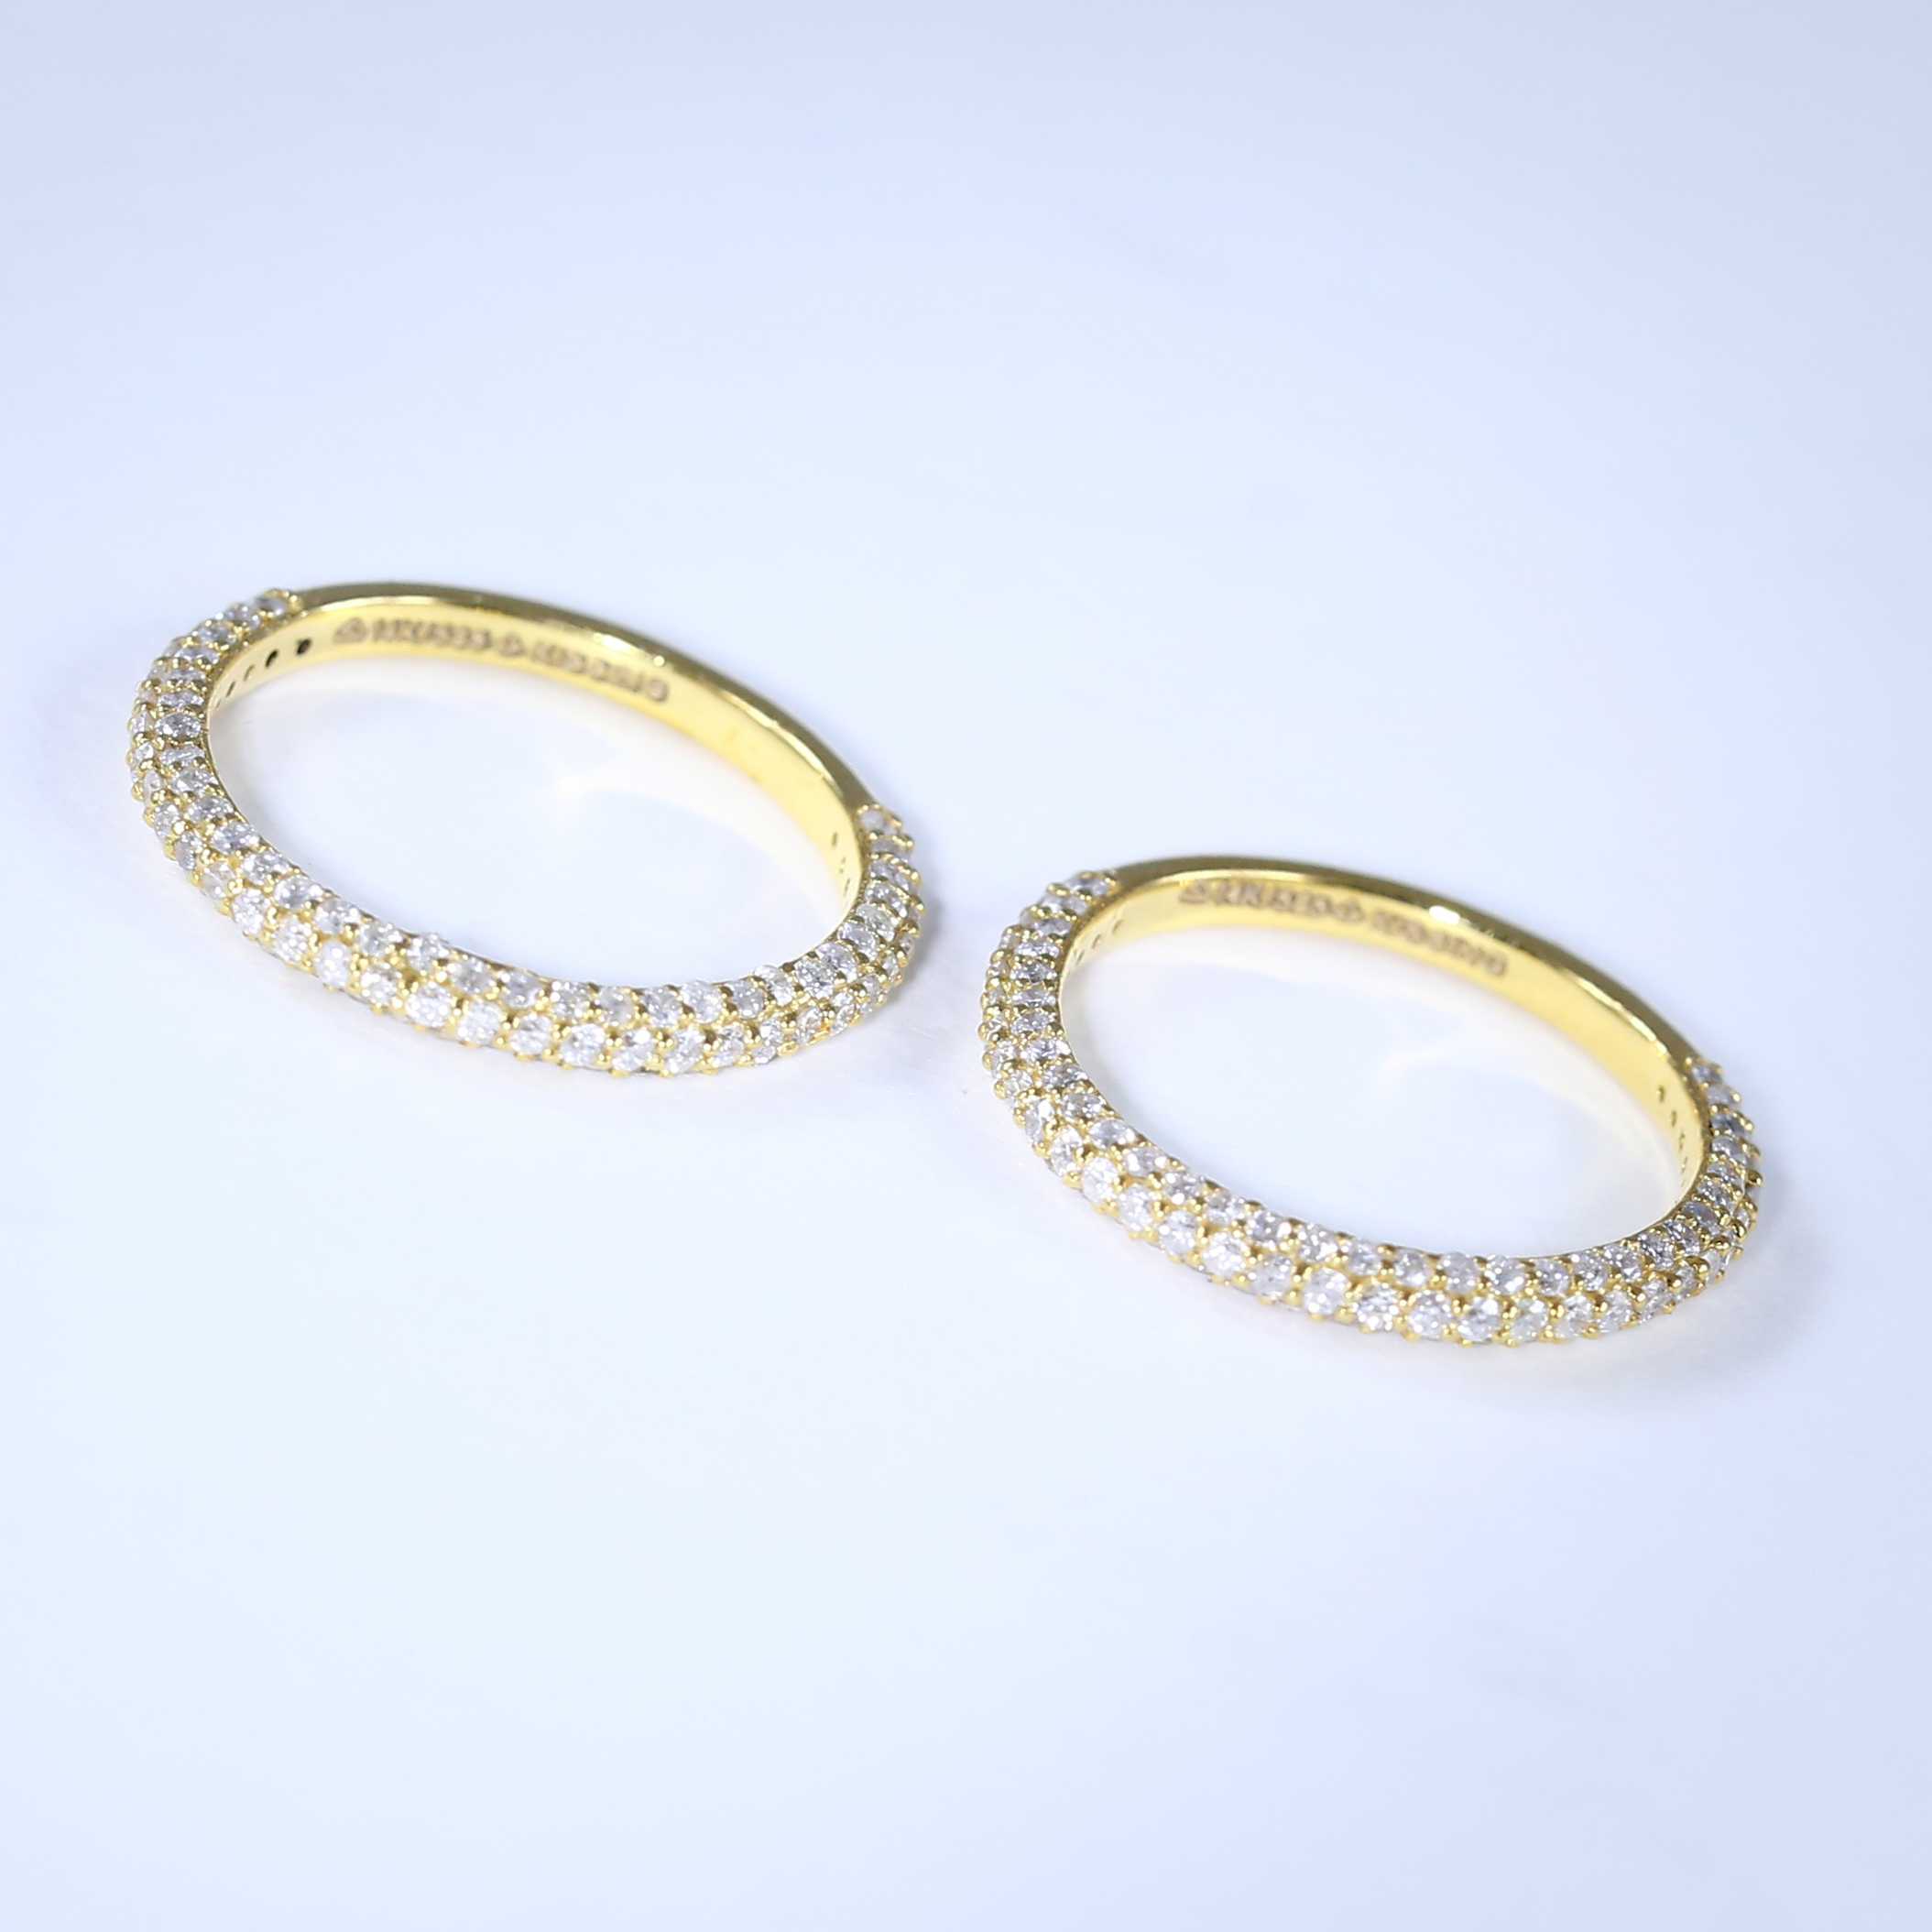 14 K / 585 Set of 2 Yellow Gold Engaement / Wedding Diamond Band Rings - Image 2 of 9